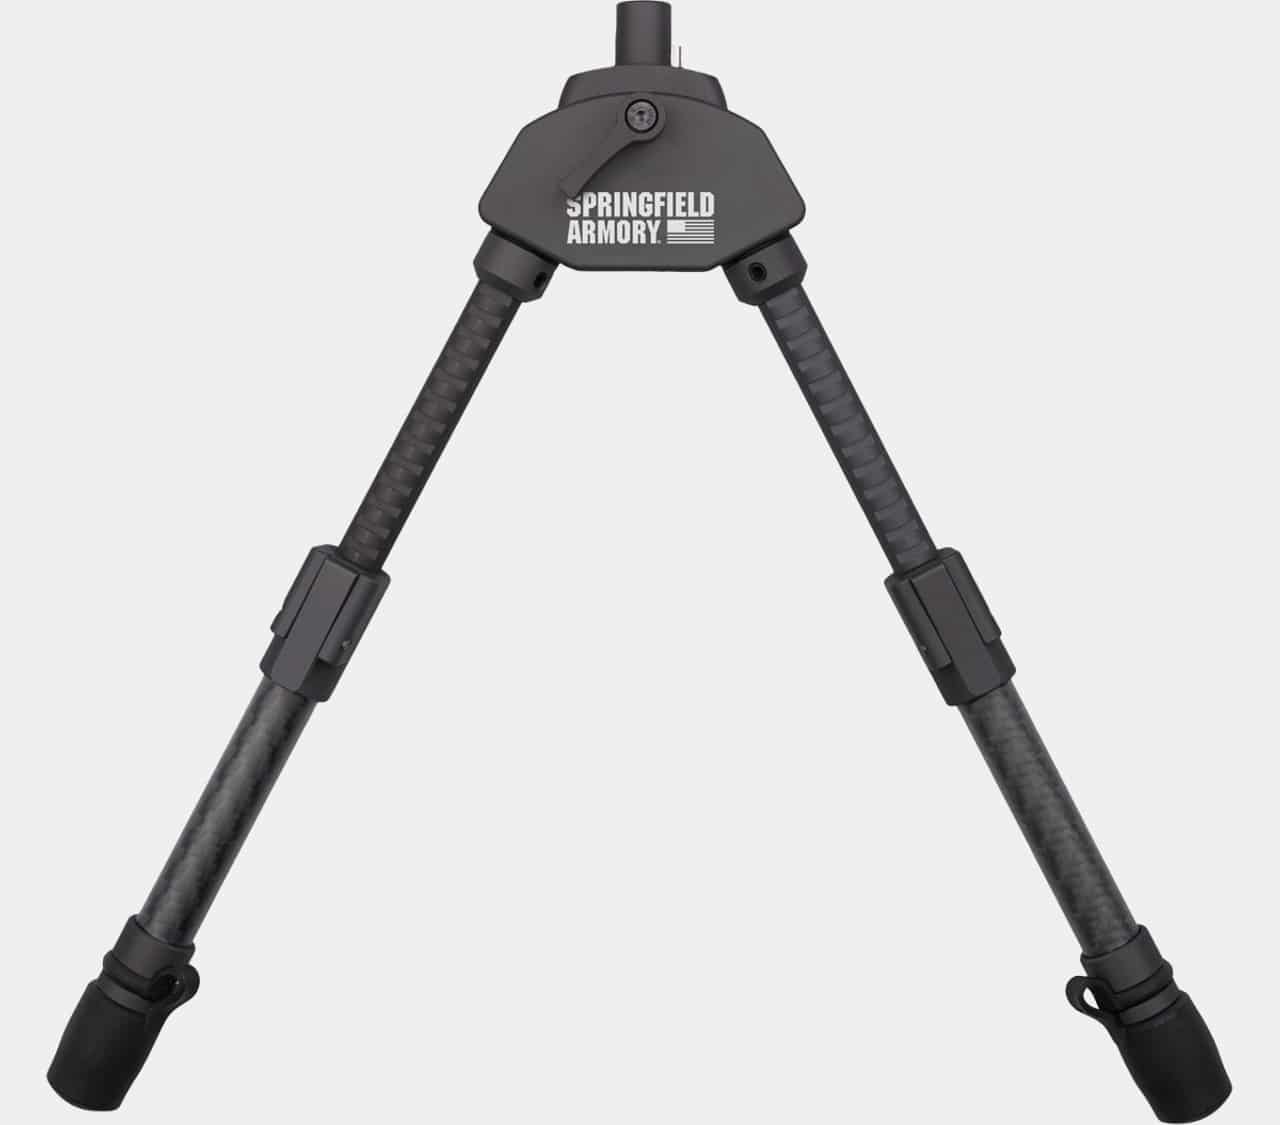 Spartan Precision Equipment Javelin Pro Hunt Tac Long Bipod with Springfield Armory Logo